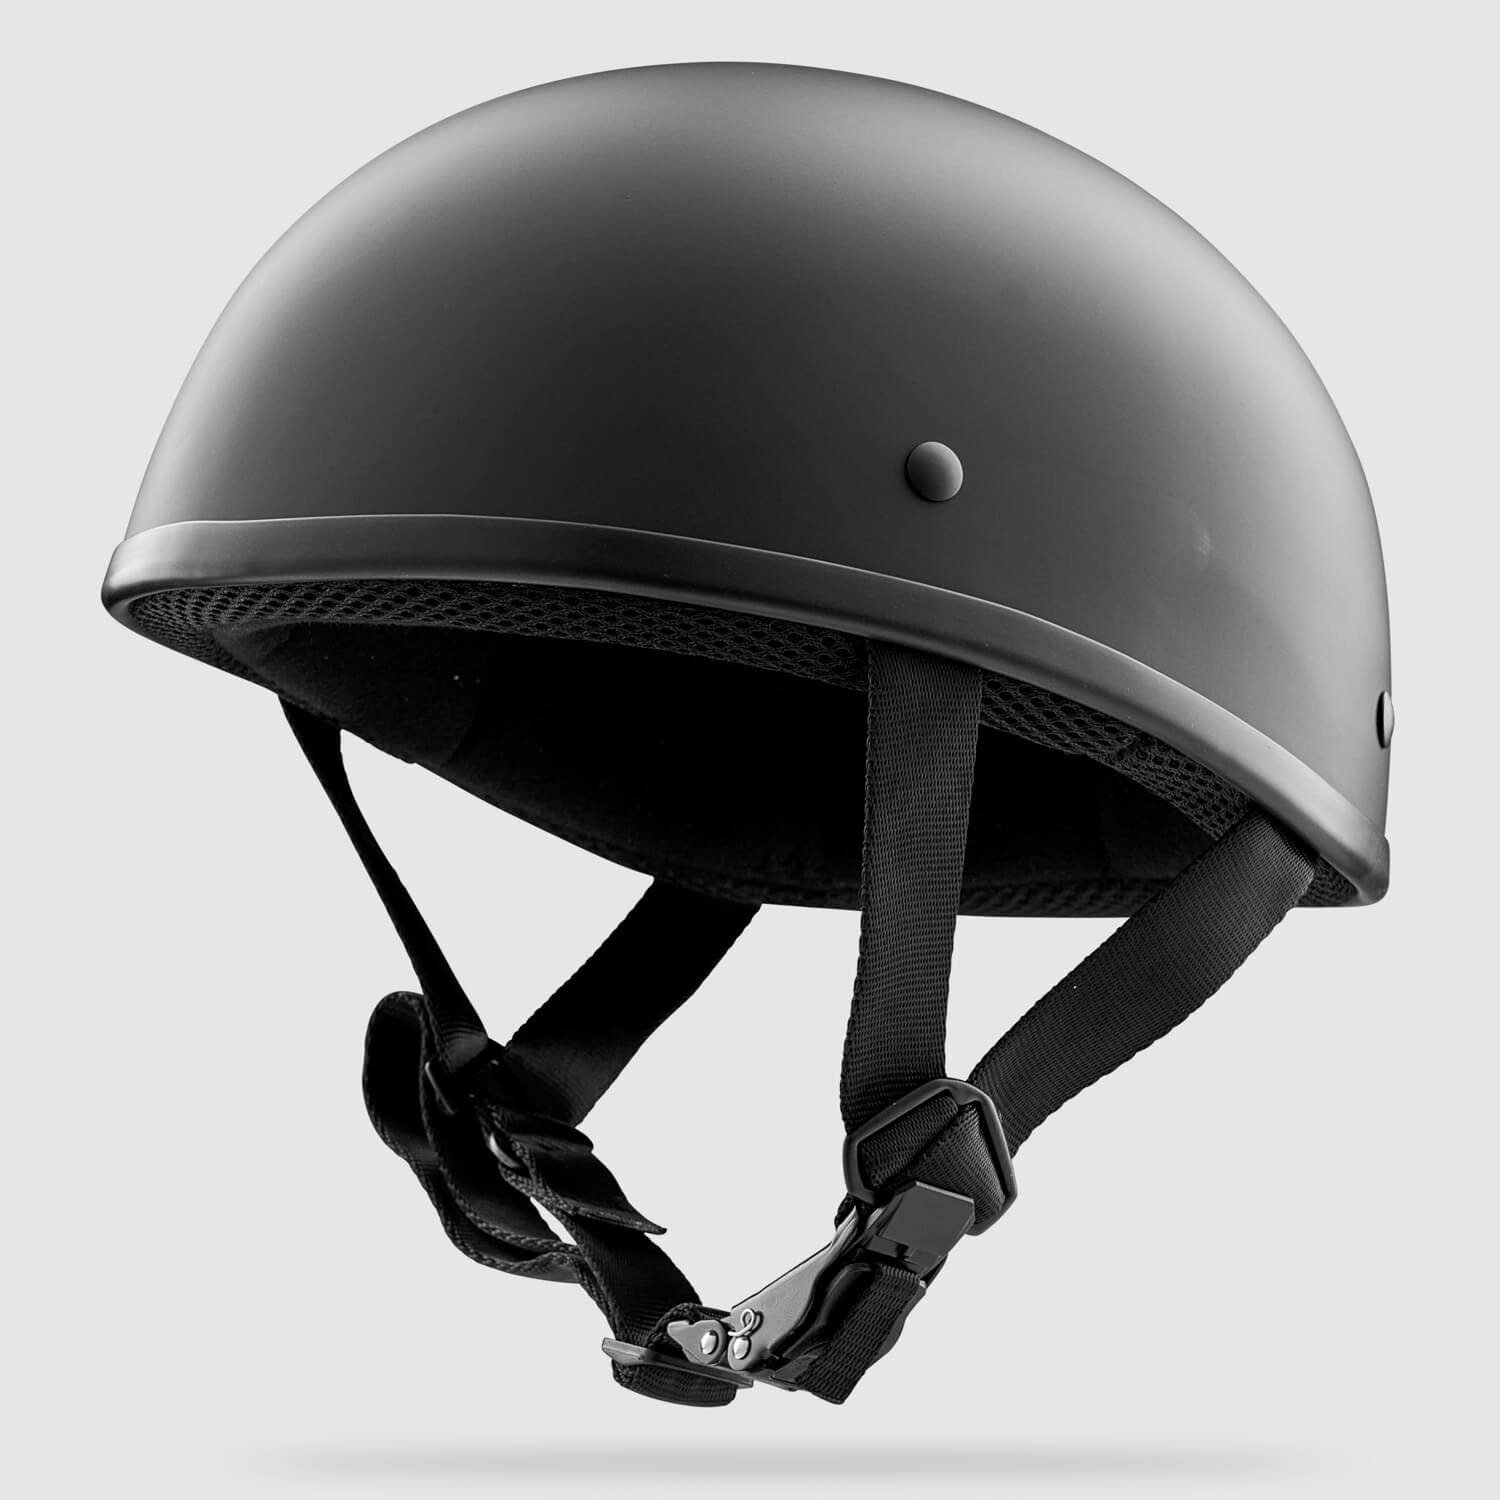 MicroDOT Approved Bike Helmets